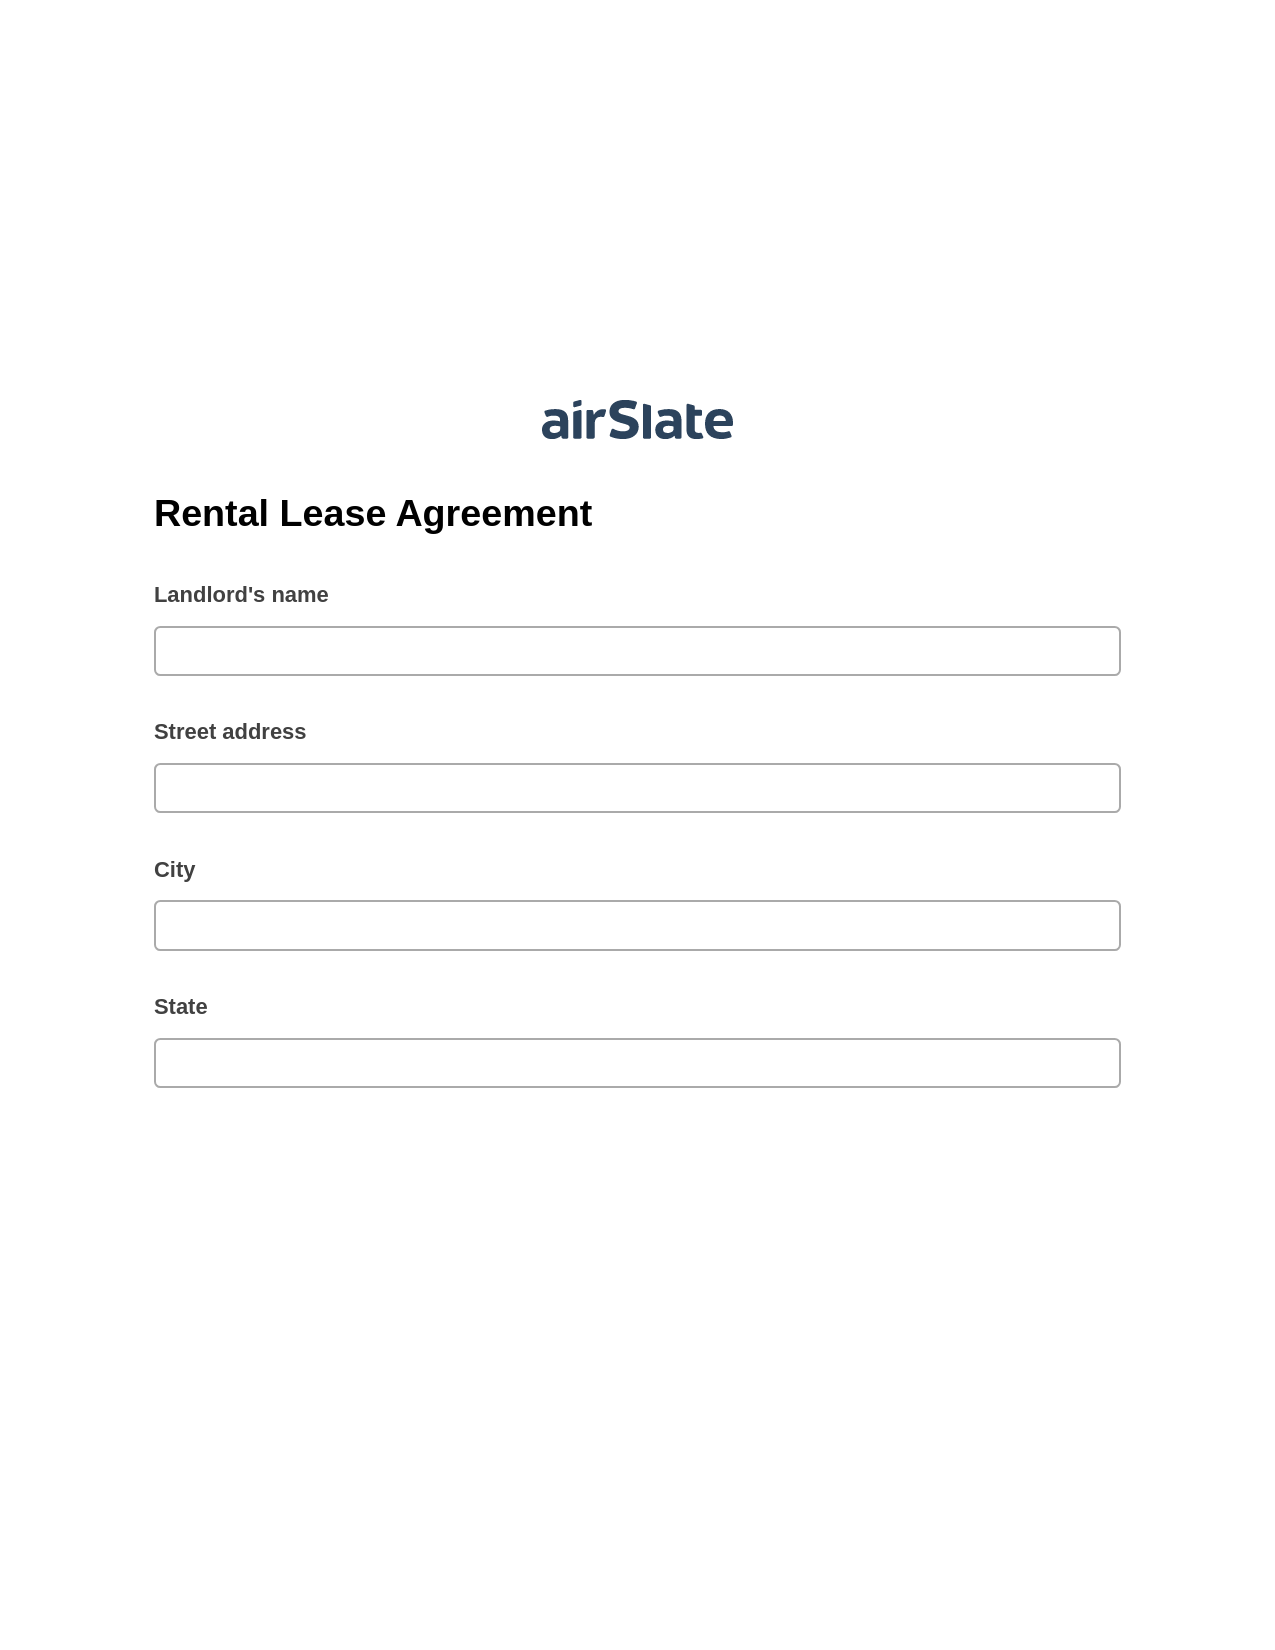 Rental Lease Agreement Pre-fill from MySQL Dropdown Options Bot, Invoke Salesforce Process Bot, Export to Smartsheet